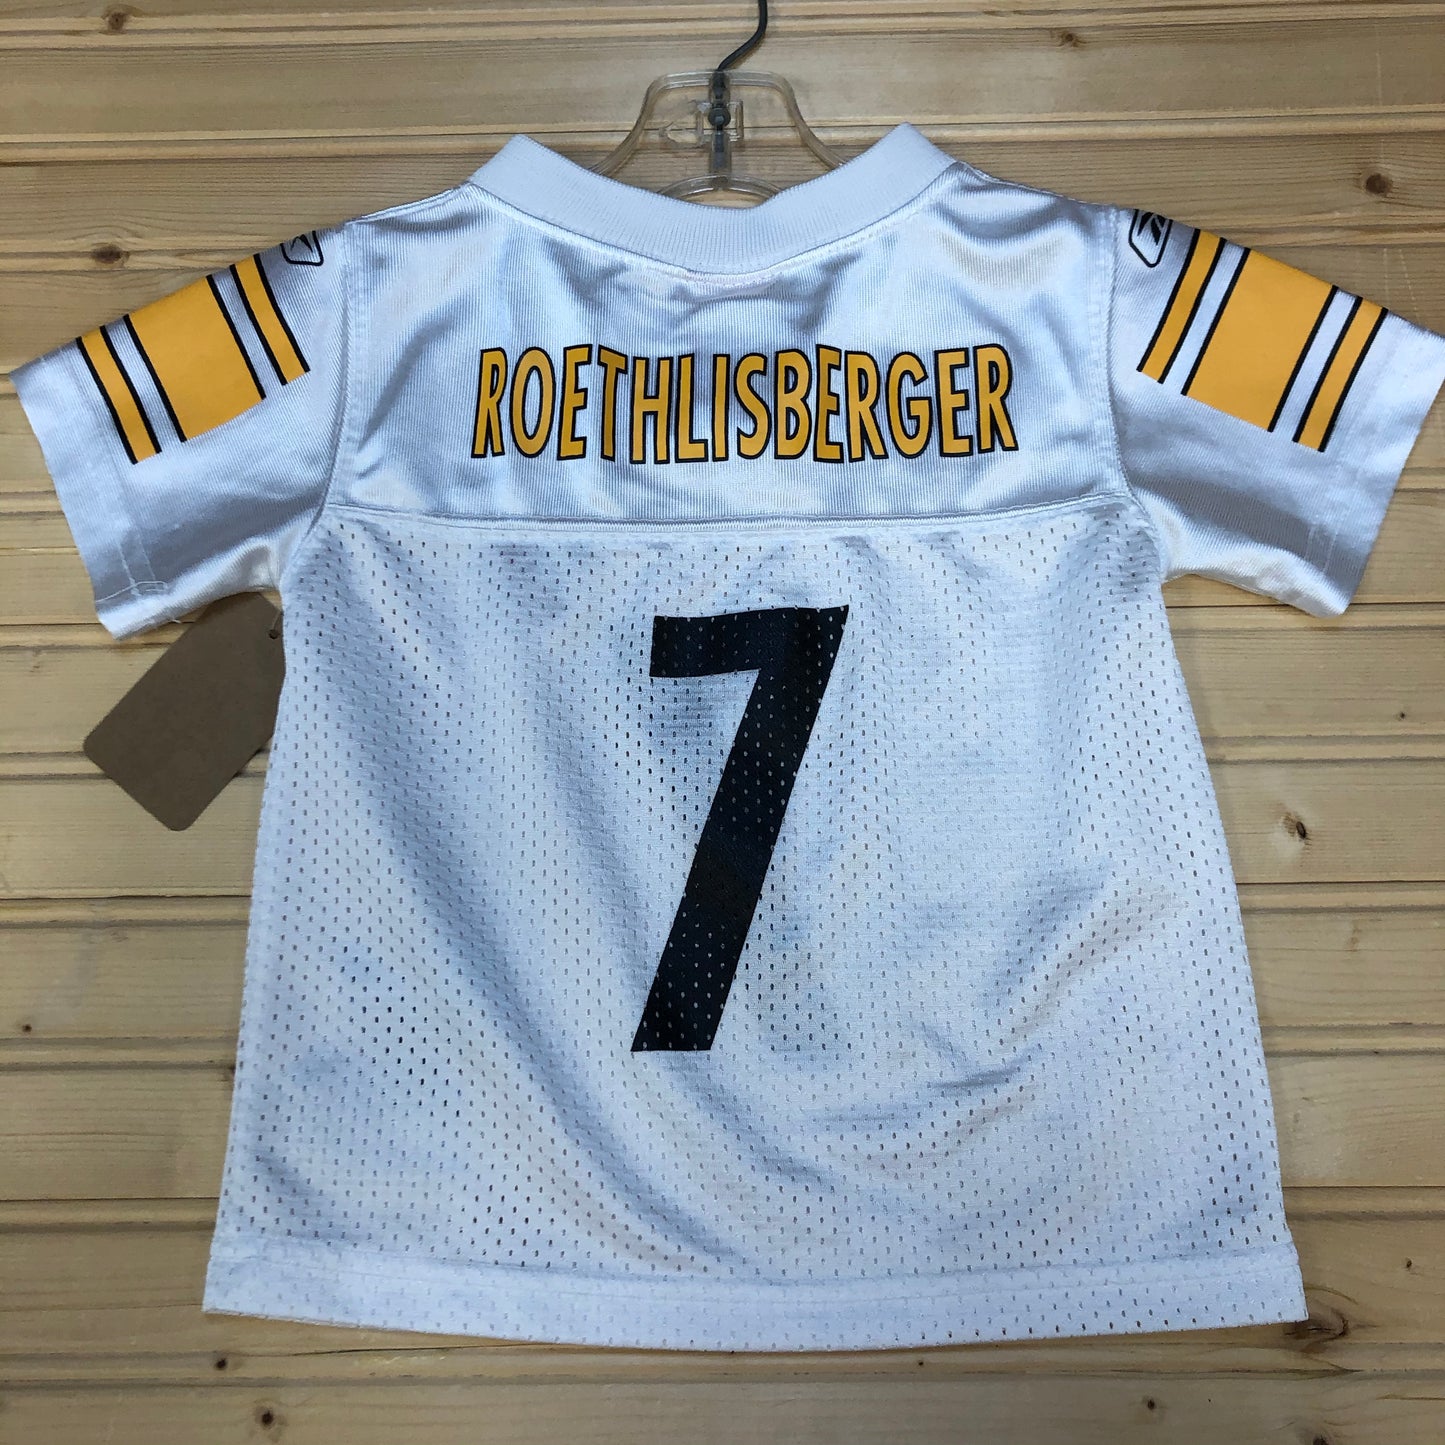 Steelers Roethlisberger Jersey